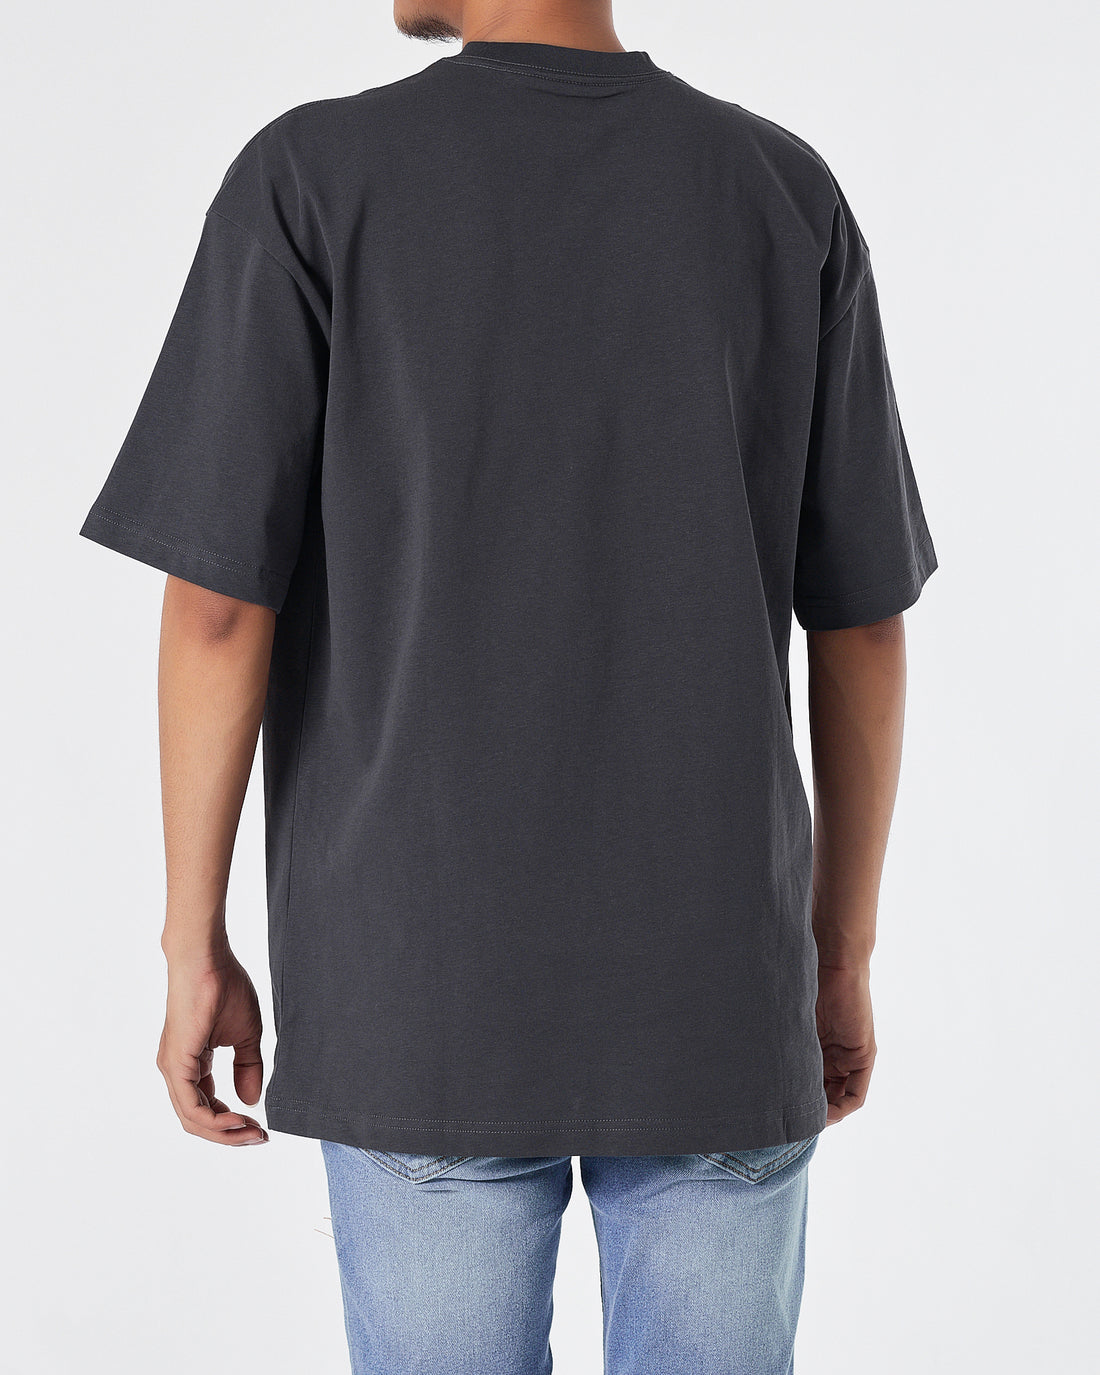 NIK Logo Embroidered Men Dark Grey T-Shirt 16.90